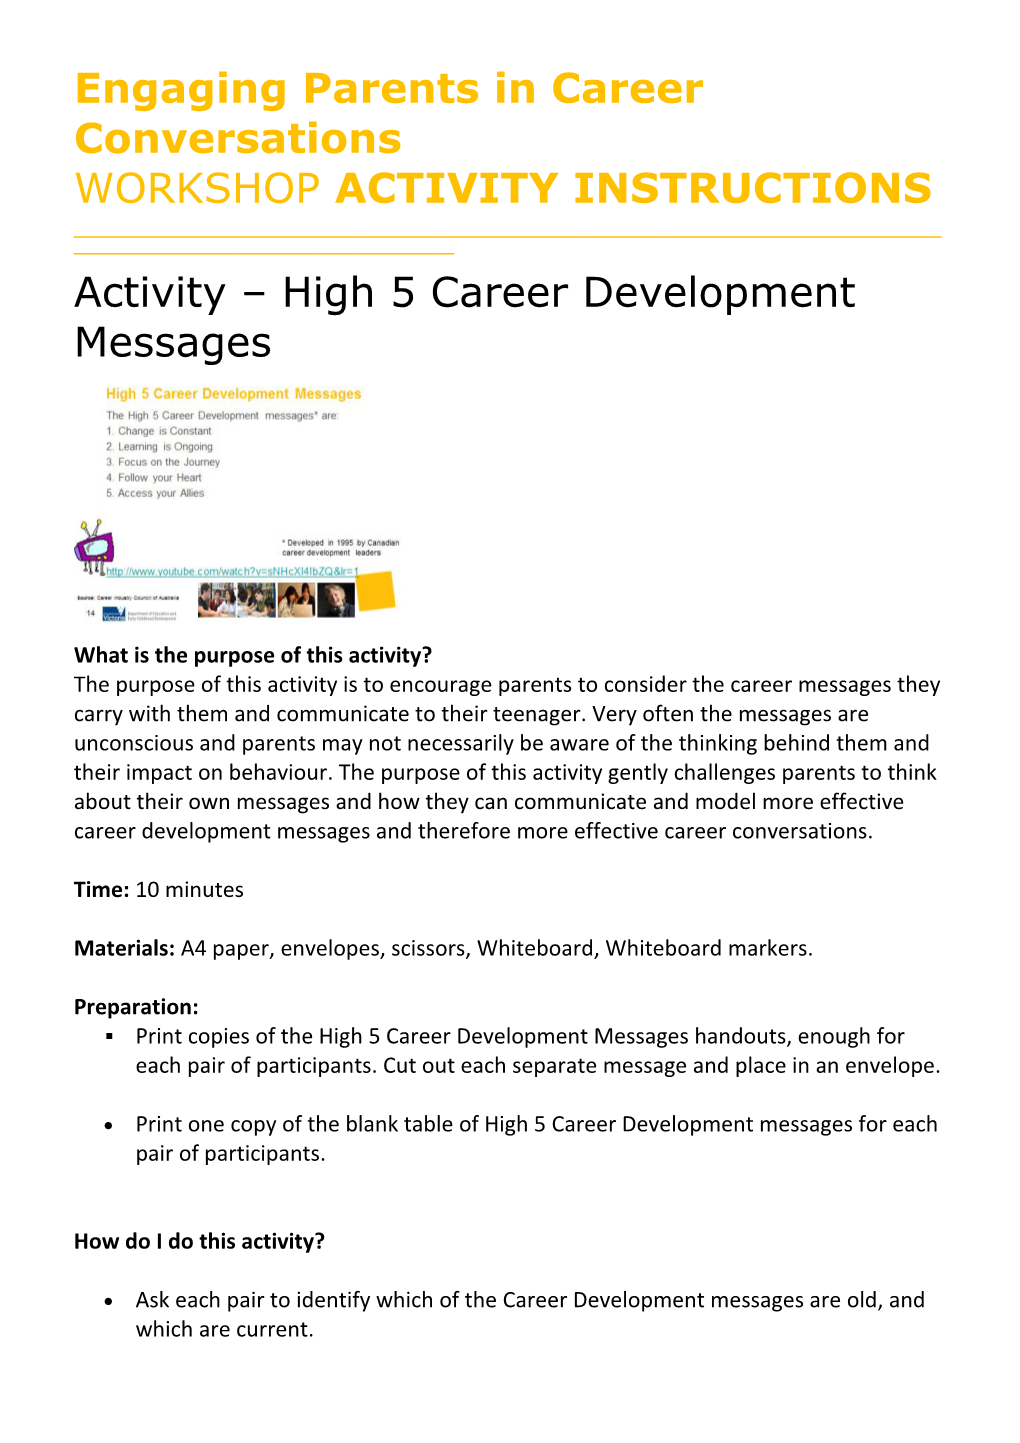 Epicc Activity - High 5 Career Development Messages